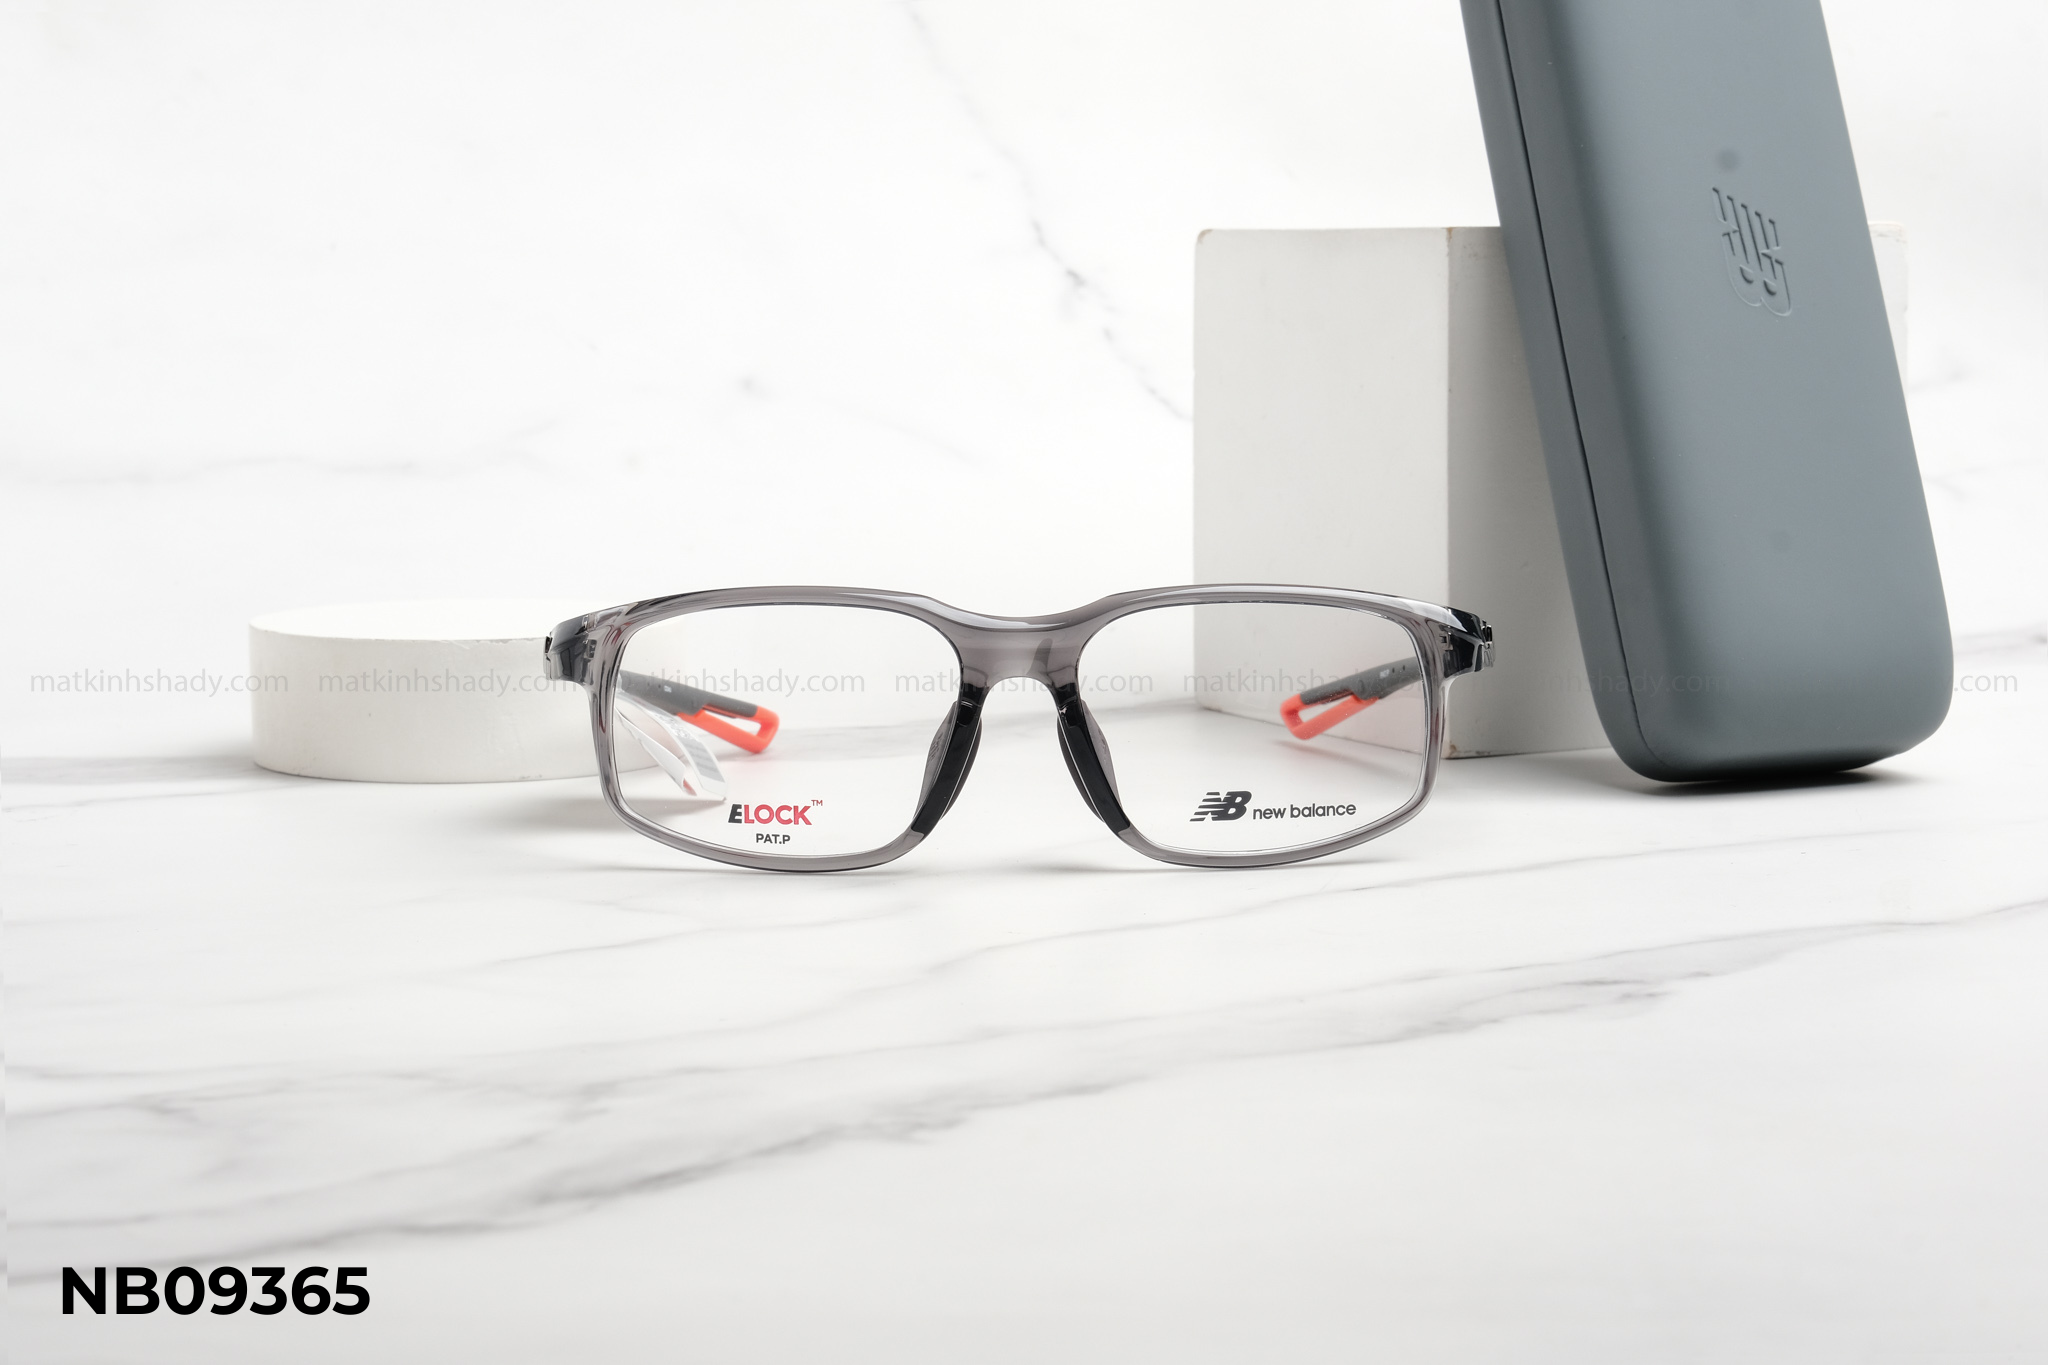  New Balance Eyewear - Glasses - NB09365 